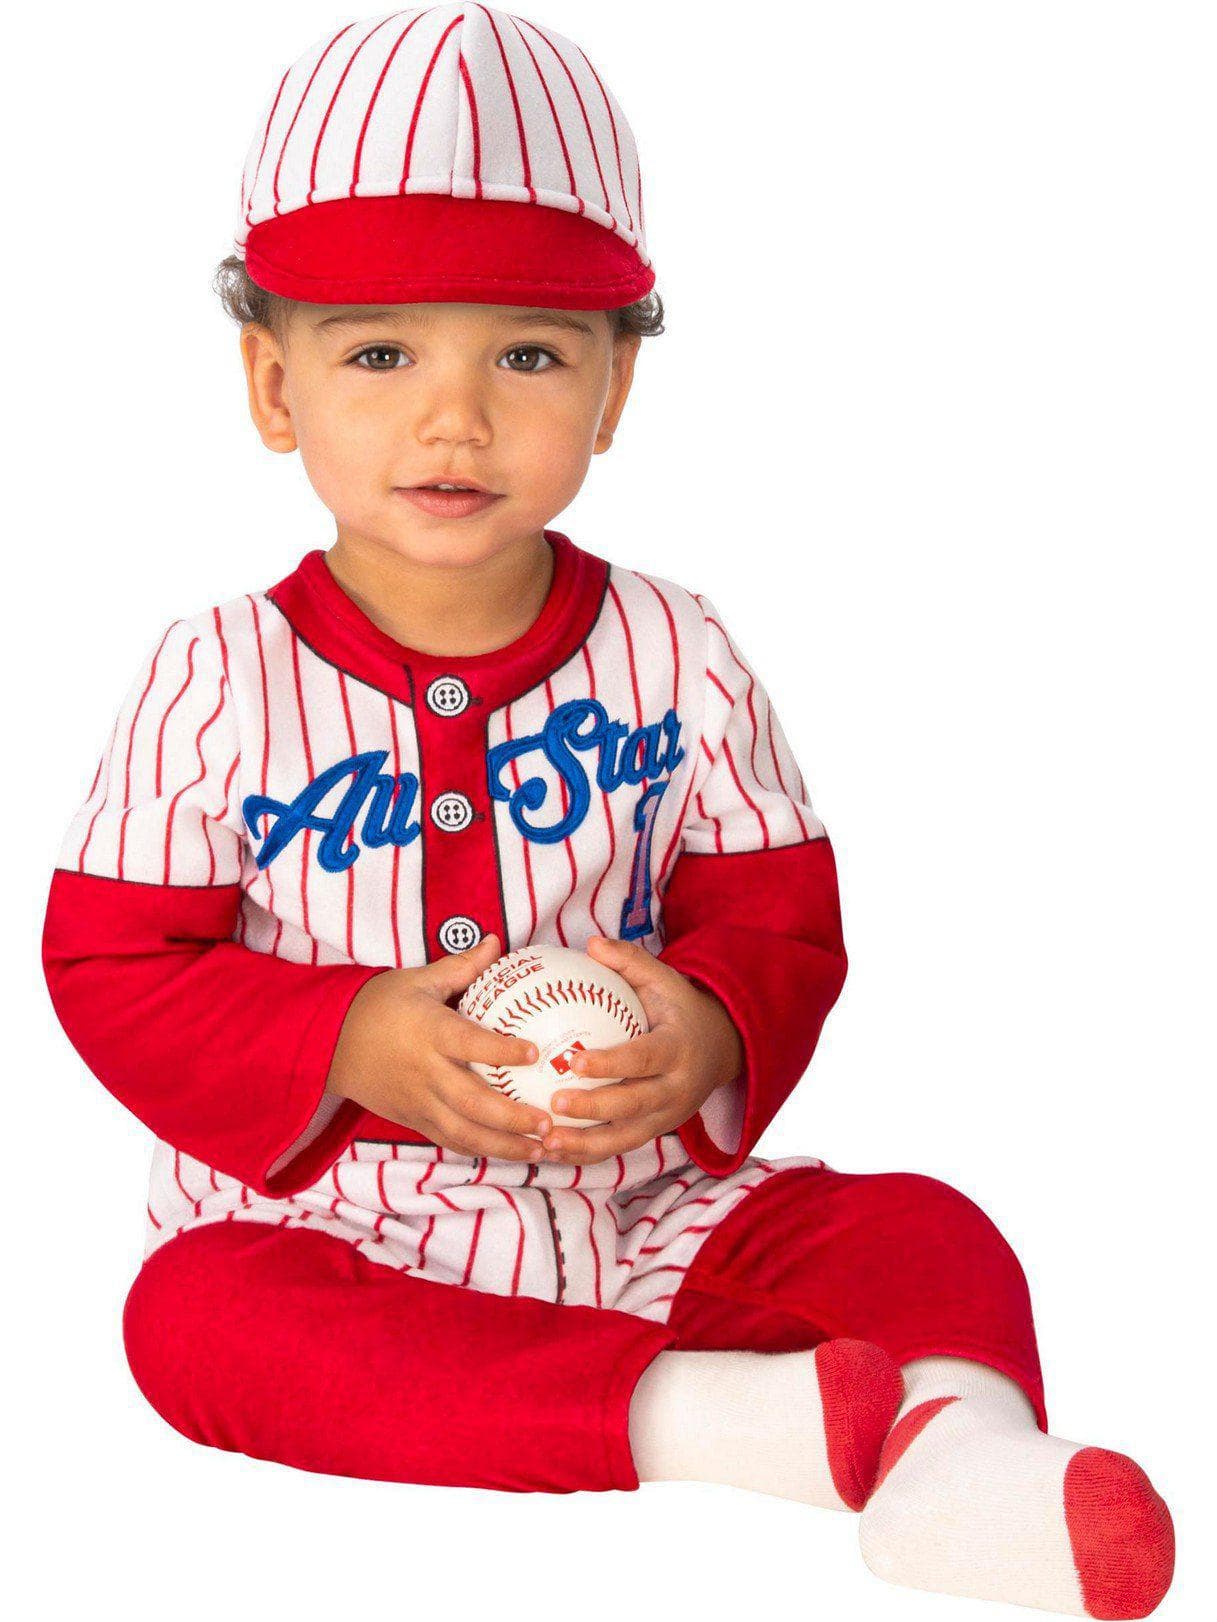 Baby/Toddler Baseball Player Costume - costumes.com